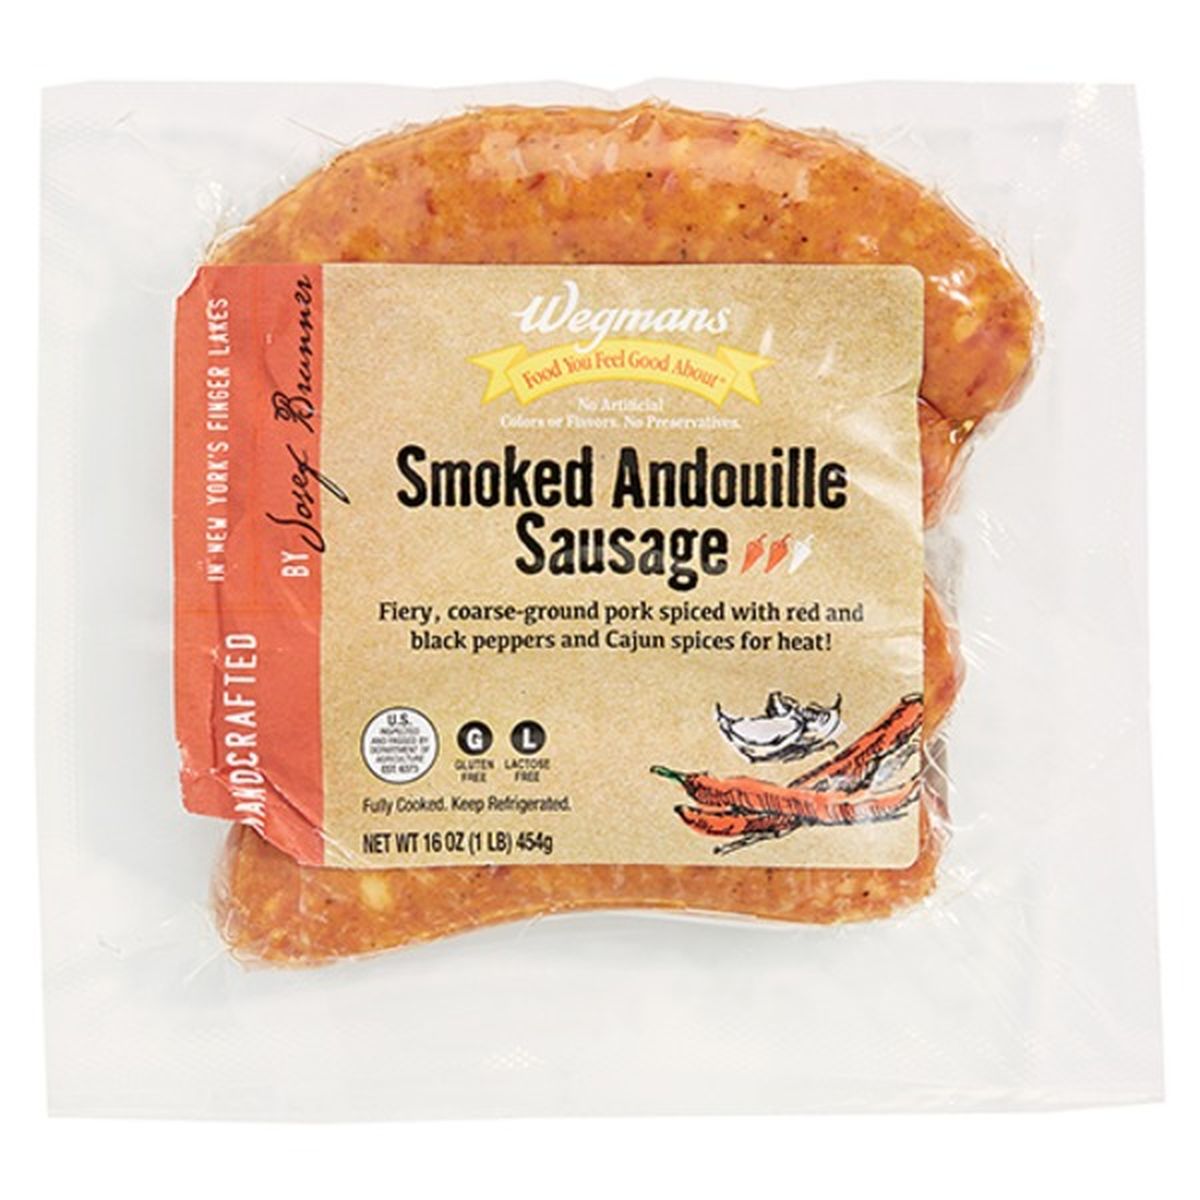 Calories in Wegmans Smoked Andouille Sausage